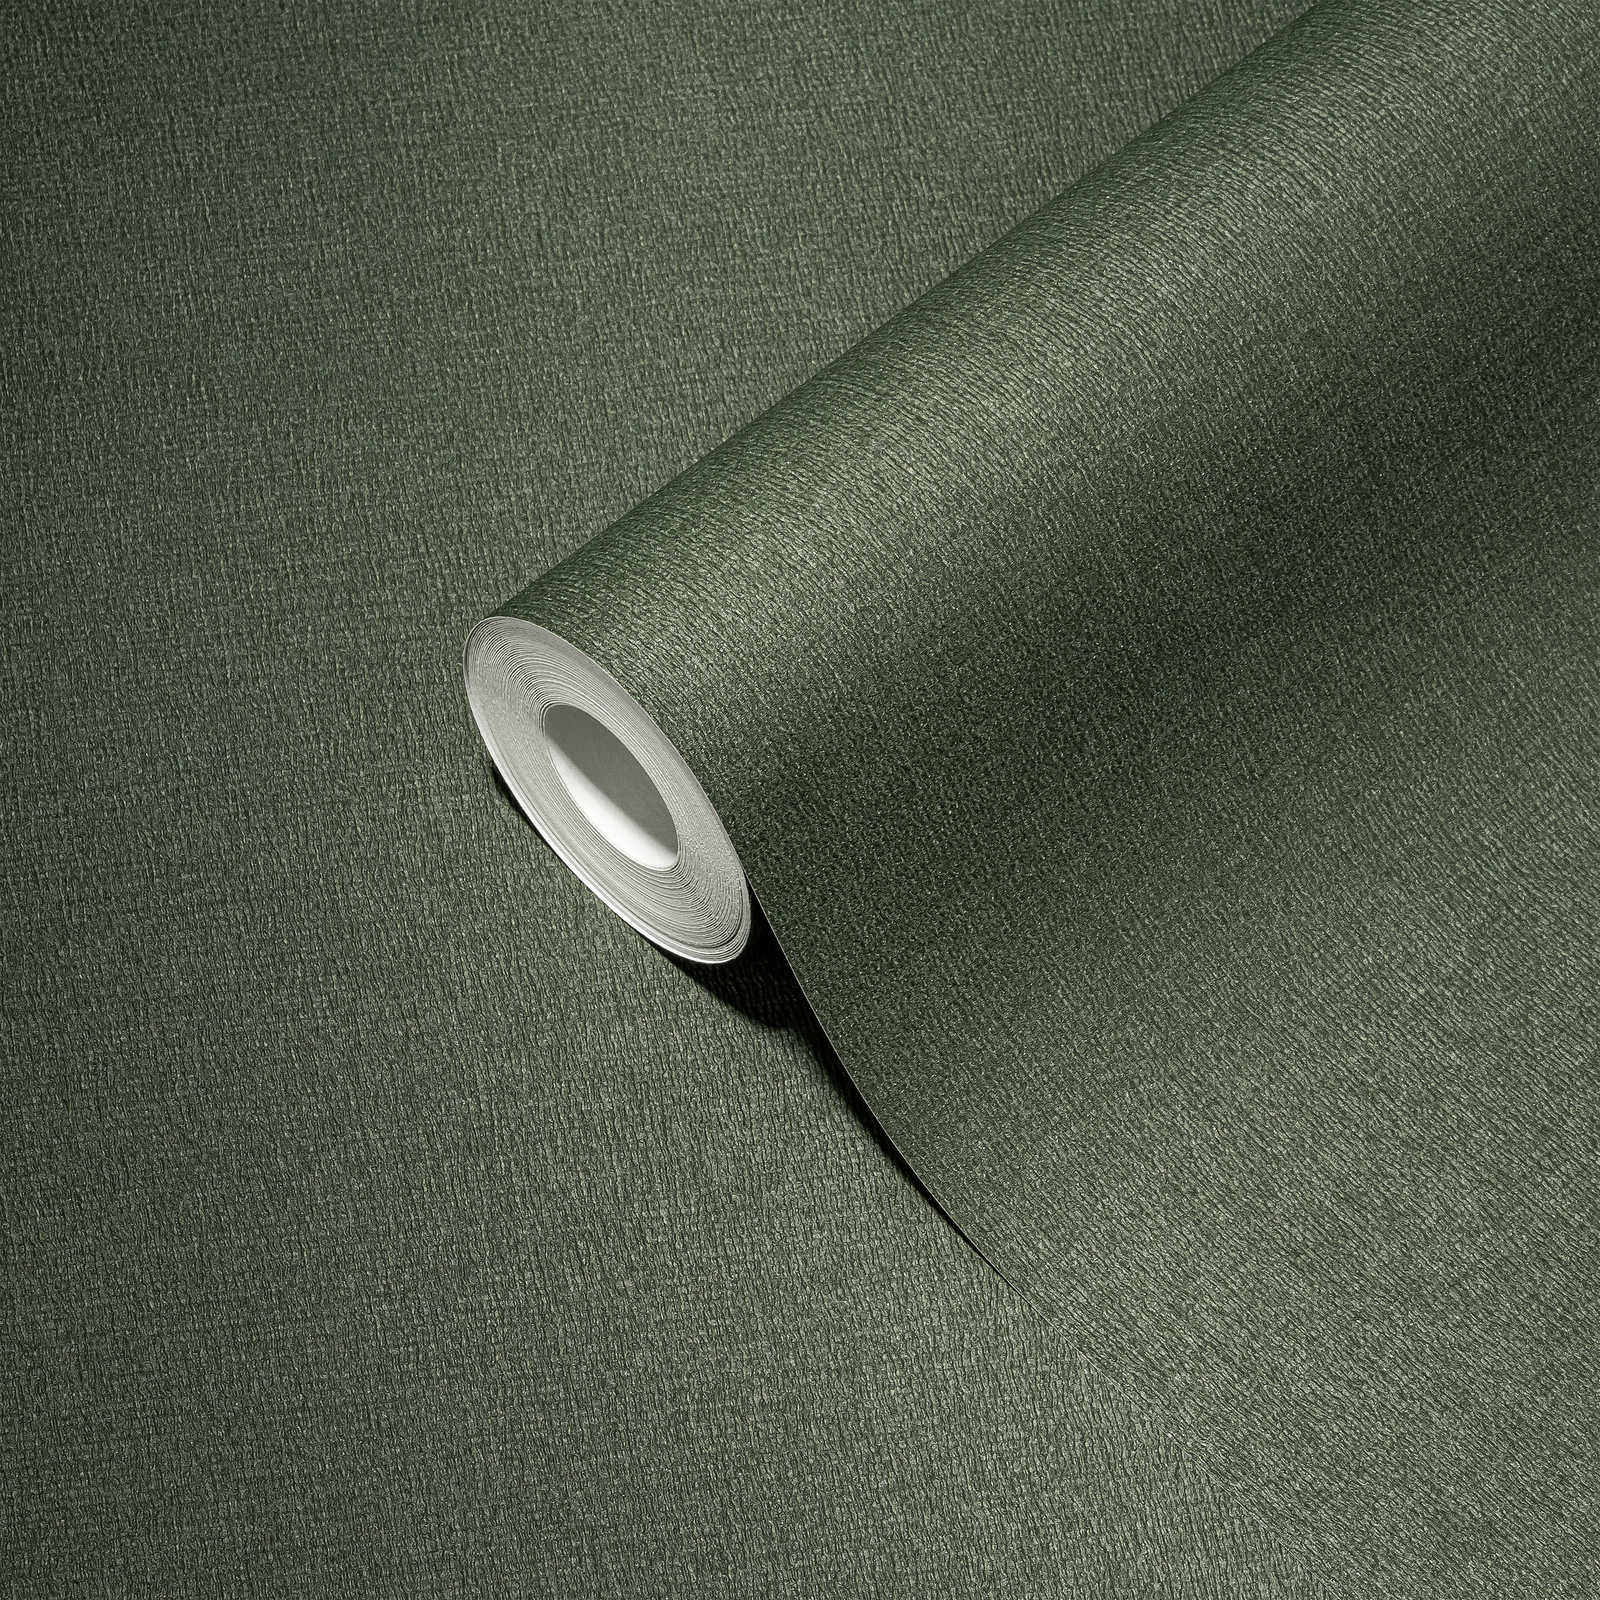             Carta da parati in tessuto non tessuto a tinta unita in colori vivaci - verde
        